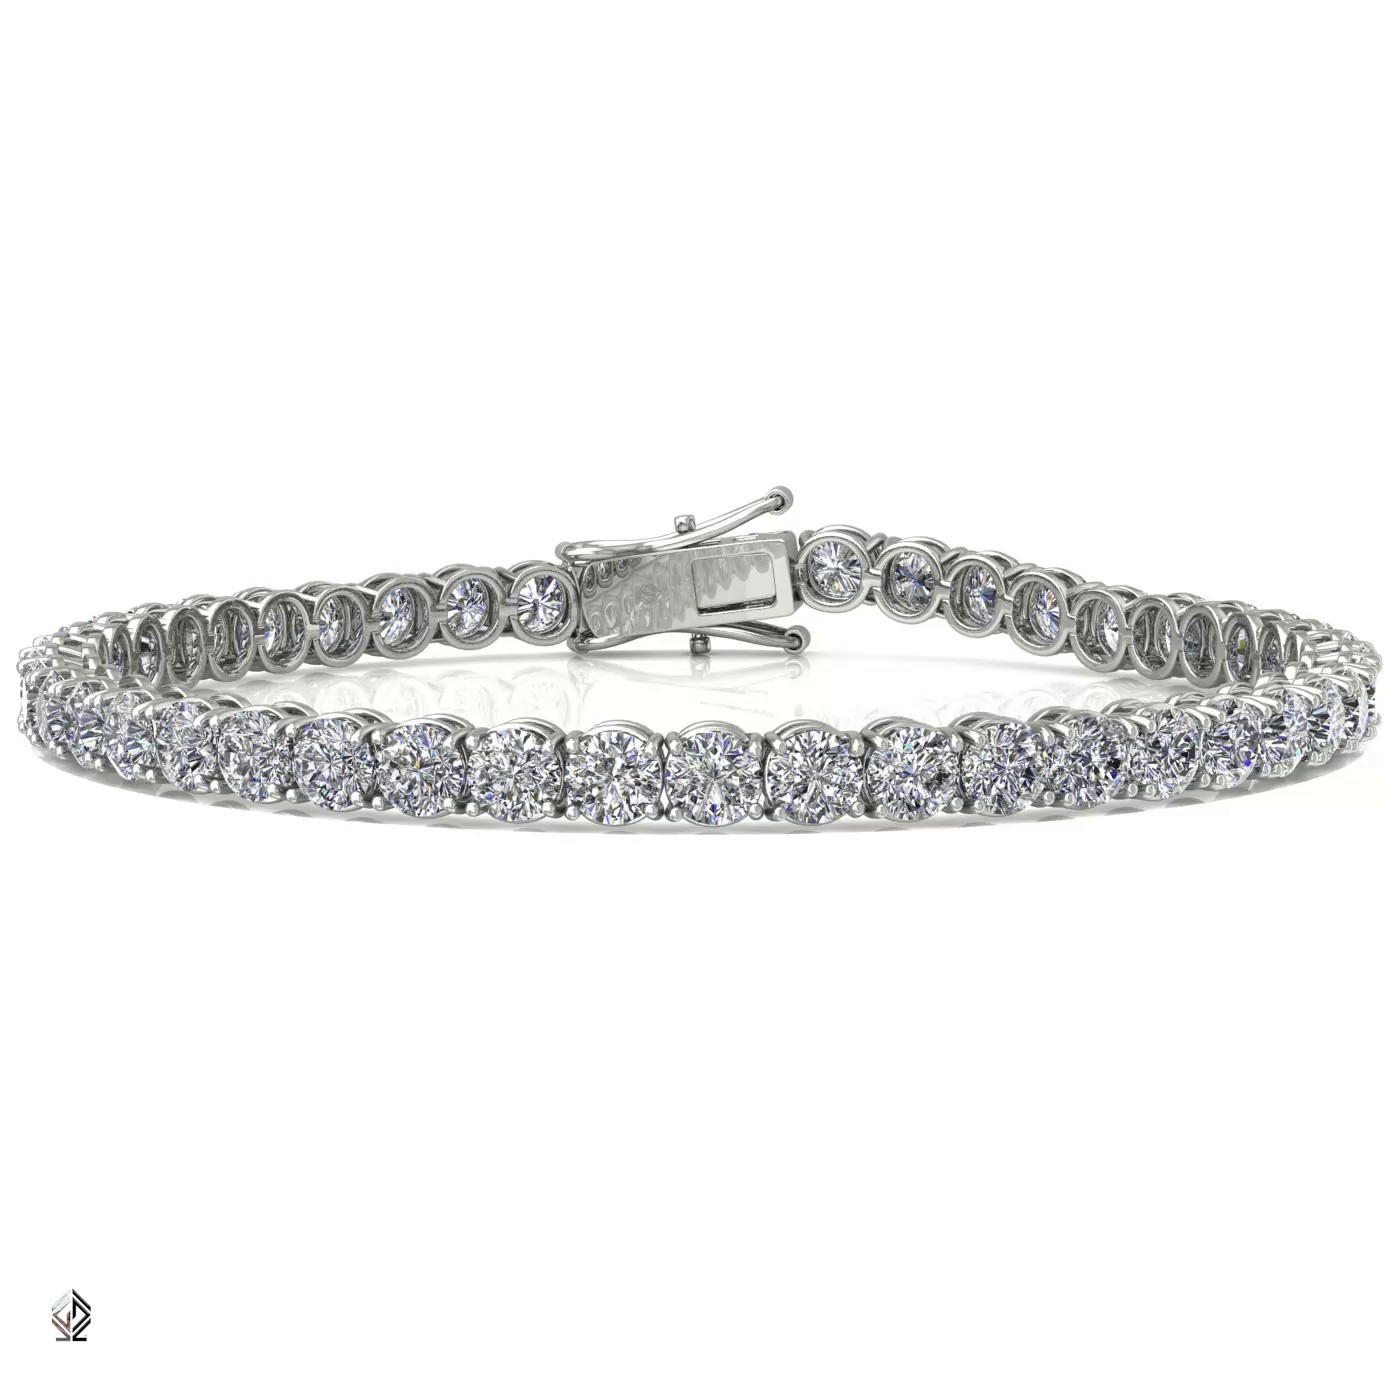 18k white gold 3.0 mm 4 prong round shape diamond tennis bracelet in round setting Photos & images